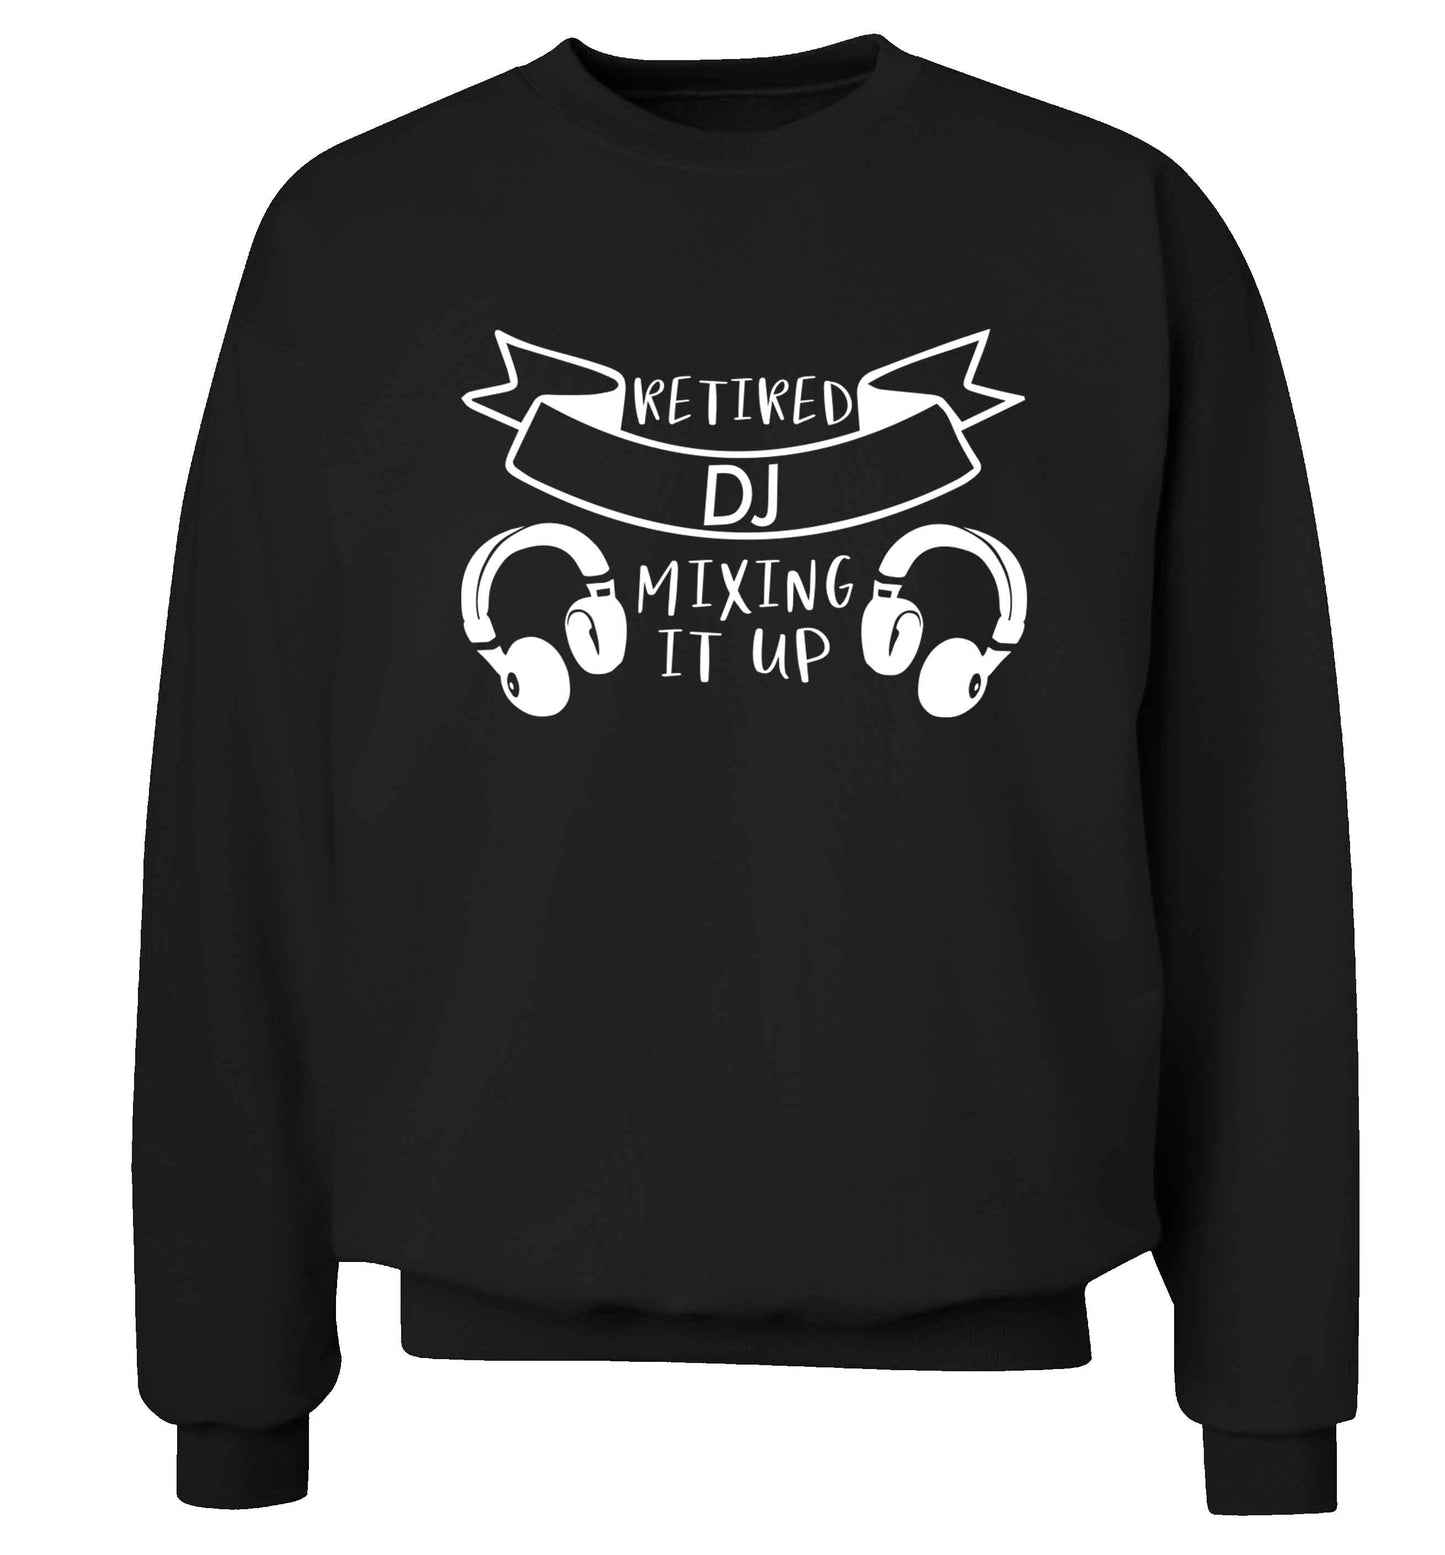 Retired DJ mixing it up Adult's unisex black Sweater 2XL